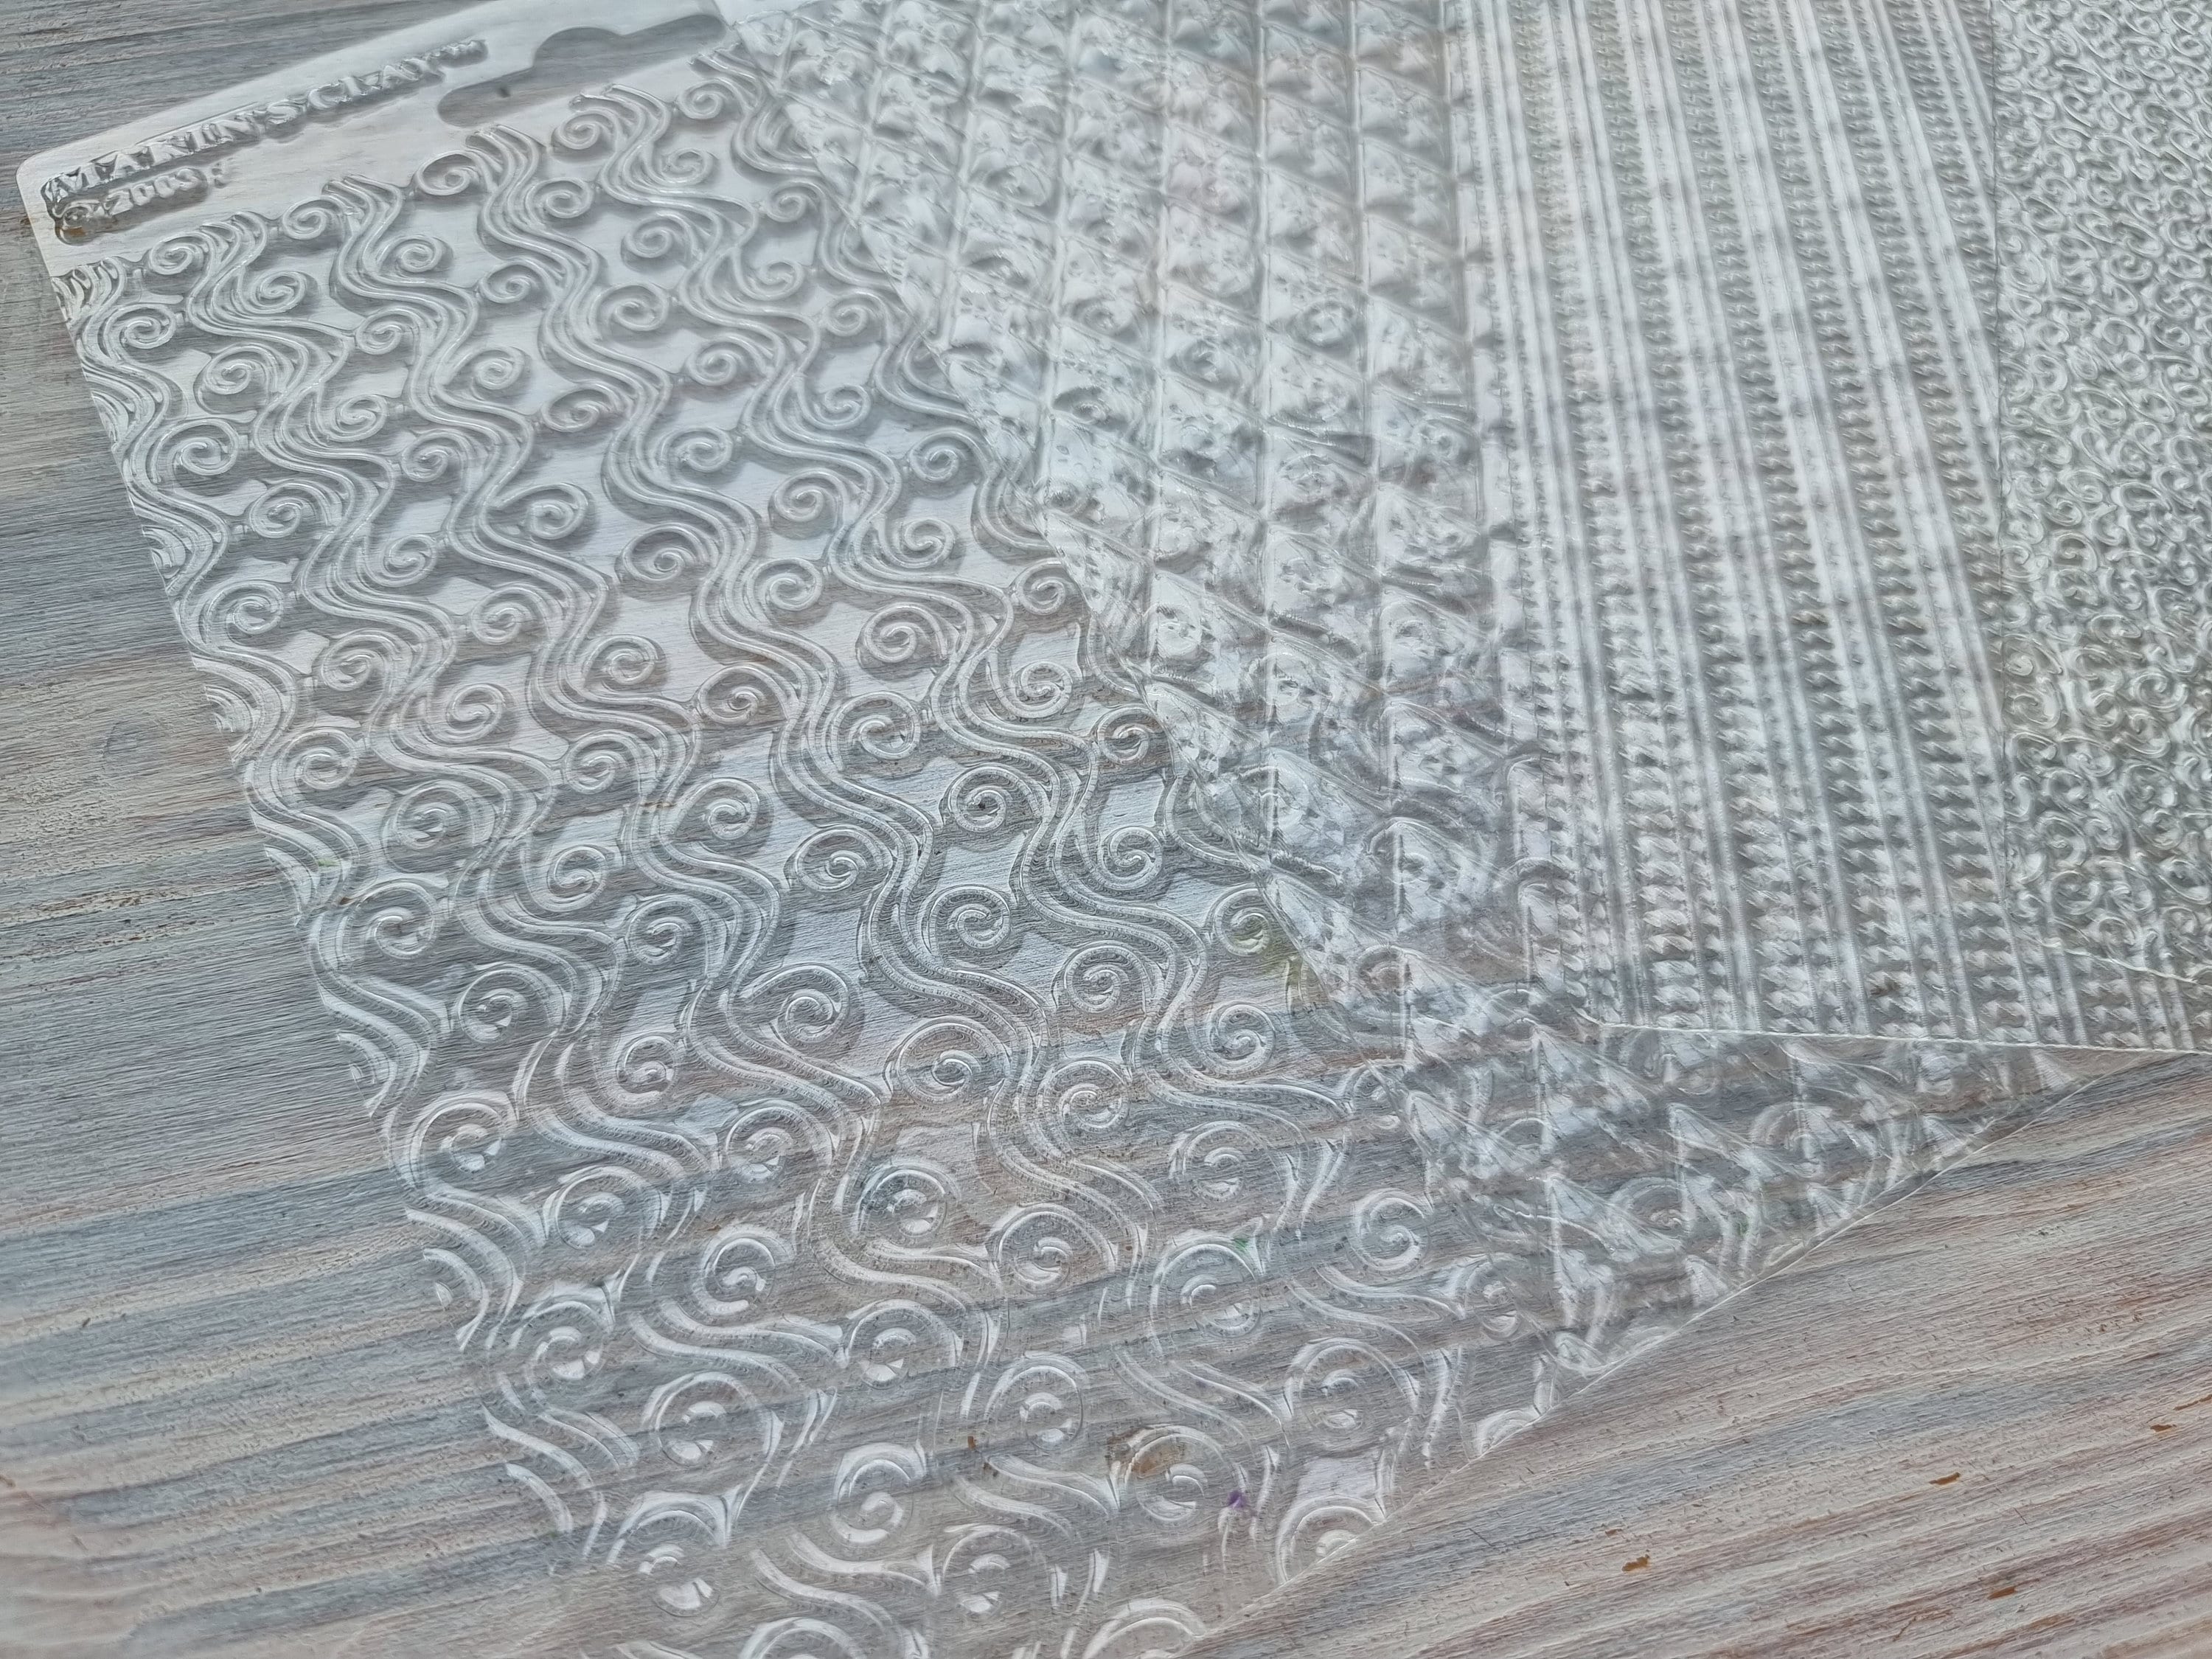 Makin's Clay Texture Sheets 7x5.5 4/Pkg-Set E (Curly Beard,Sweater,Diamond&Fur)